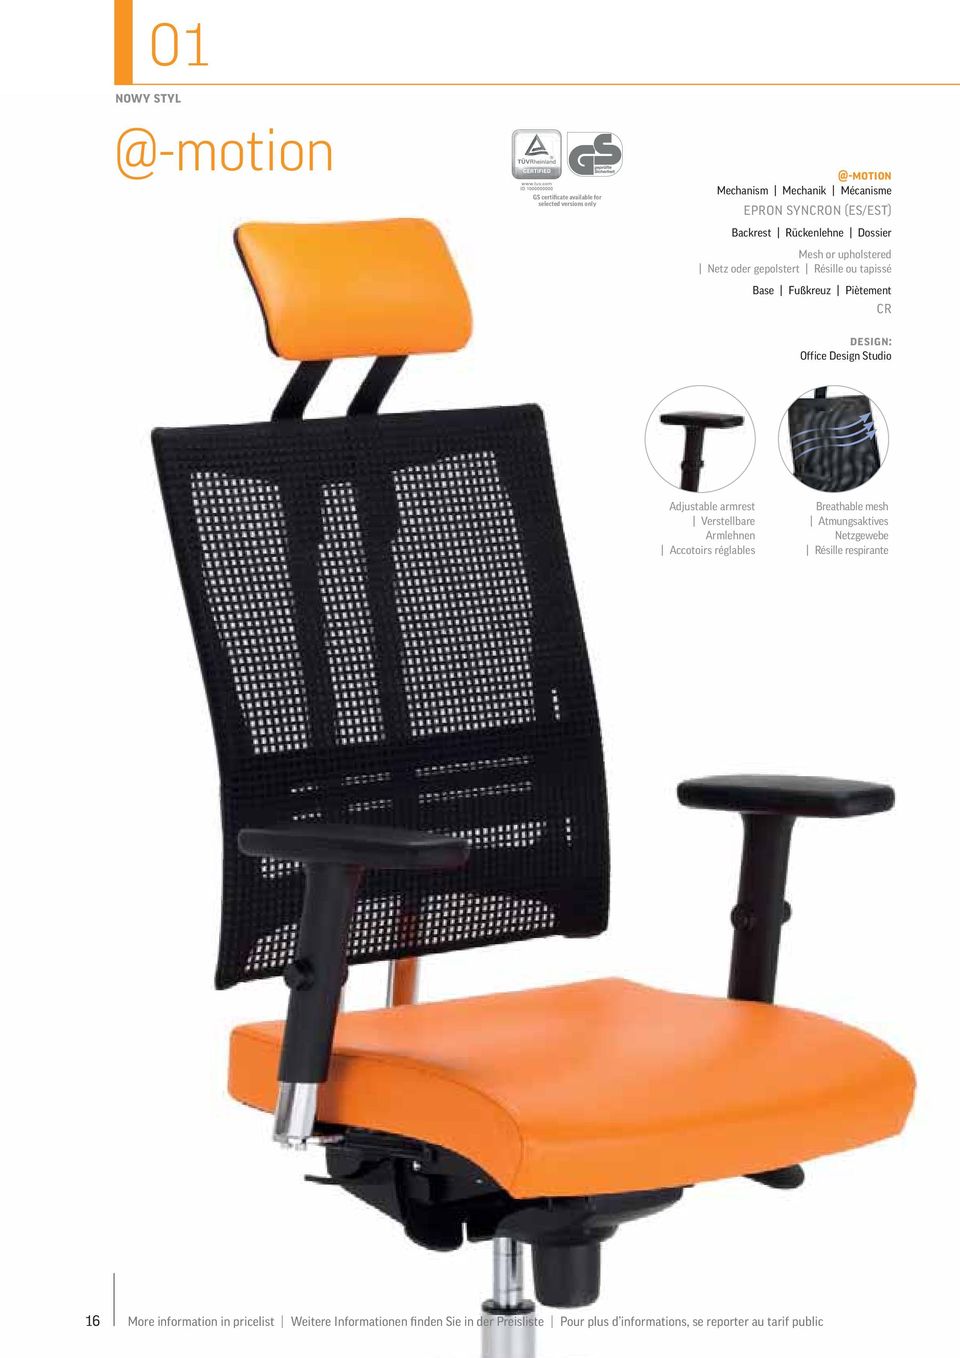 Design Studio Adjustable armrest Verstellbare Armlehnen Accotoirs réglables Breathable mesh Atmungsaktives Netzgewebe Résille